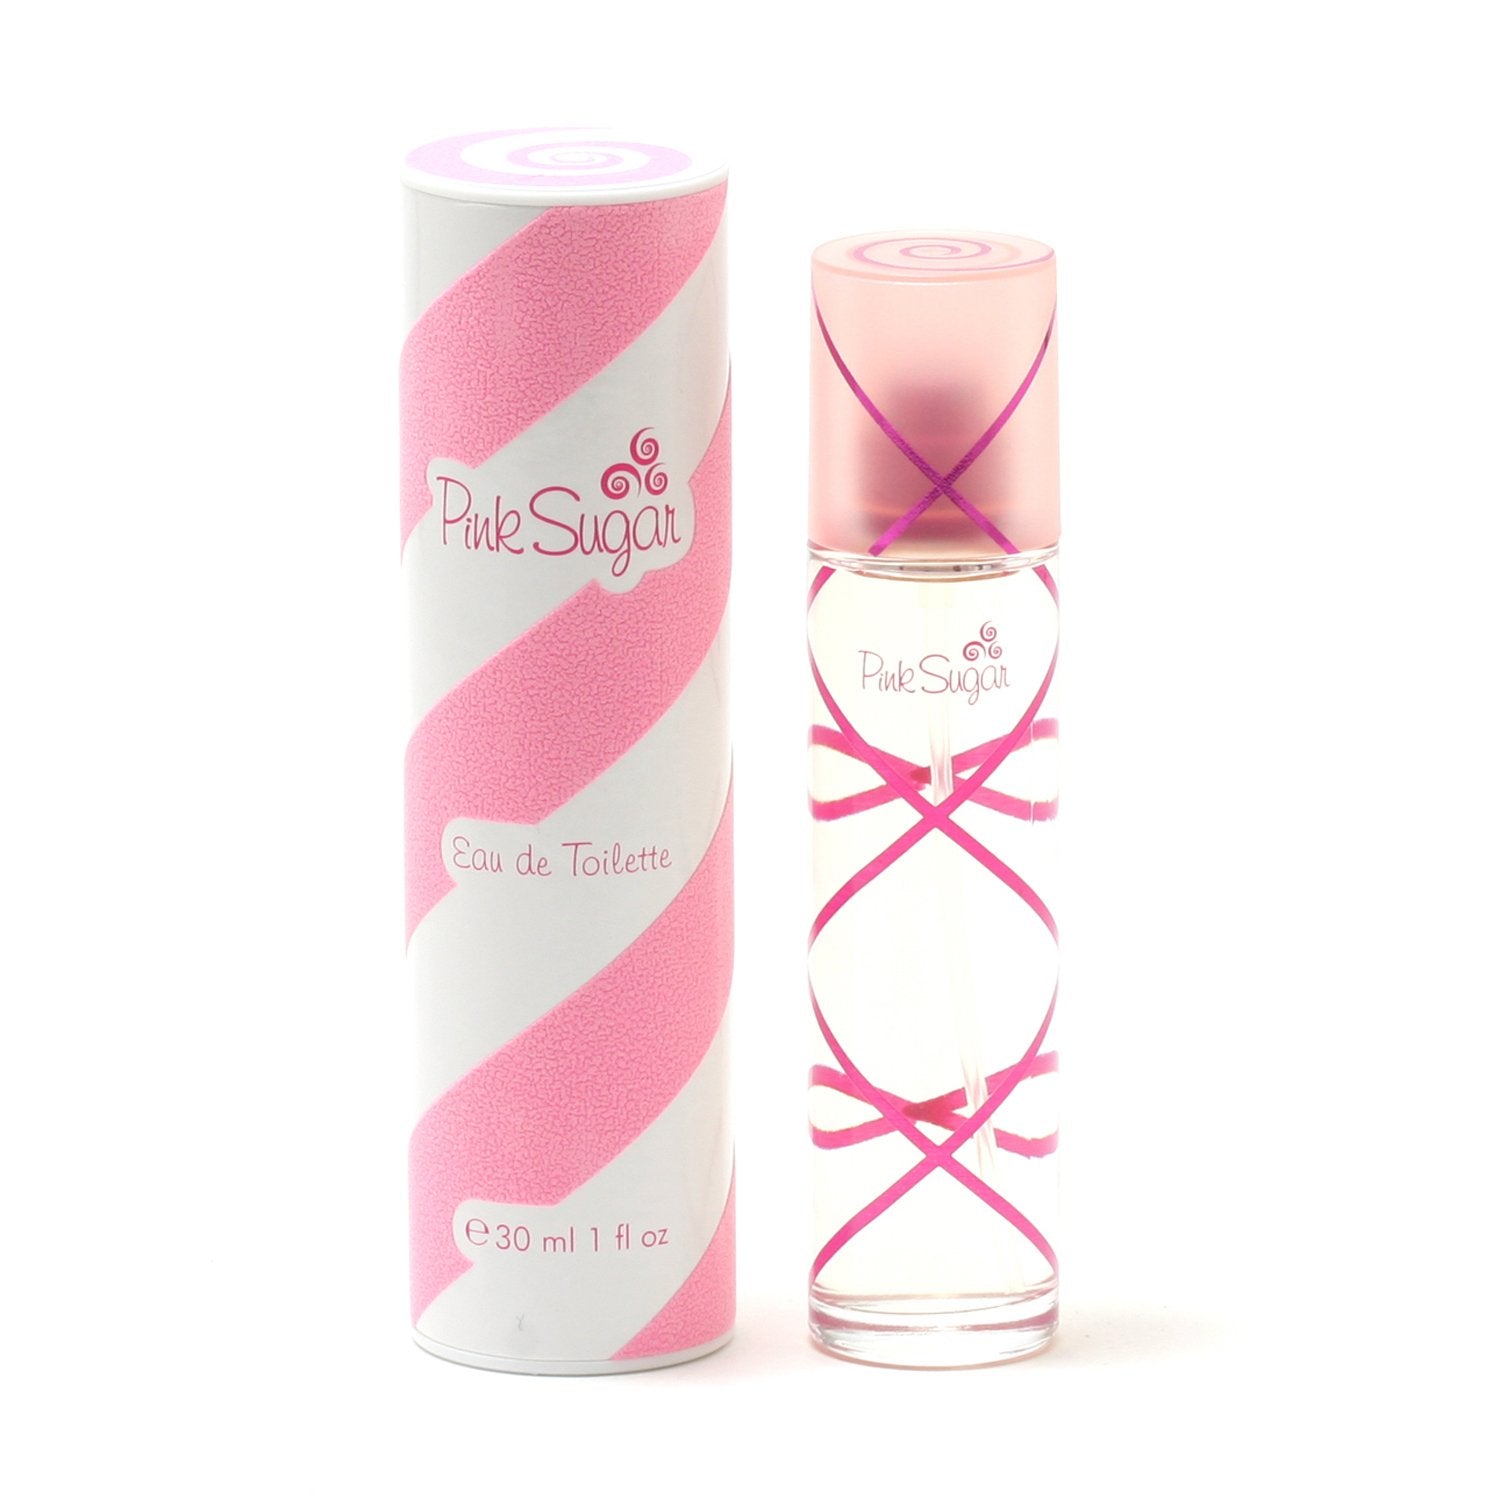 Perfume - PINK SUGAR FOR WOMEN BY AQUOLINA - EAU DE TOILETTE SPRAY